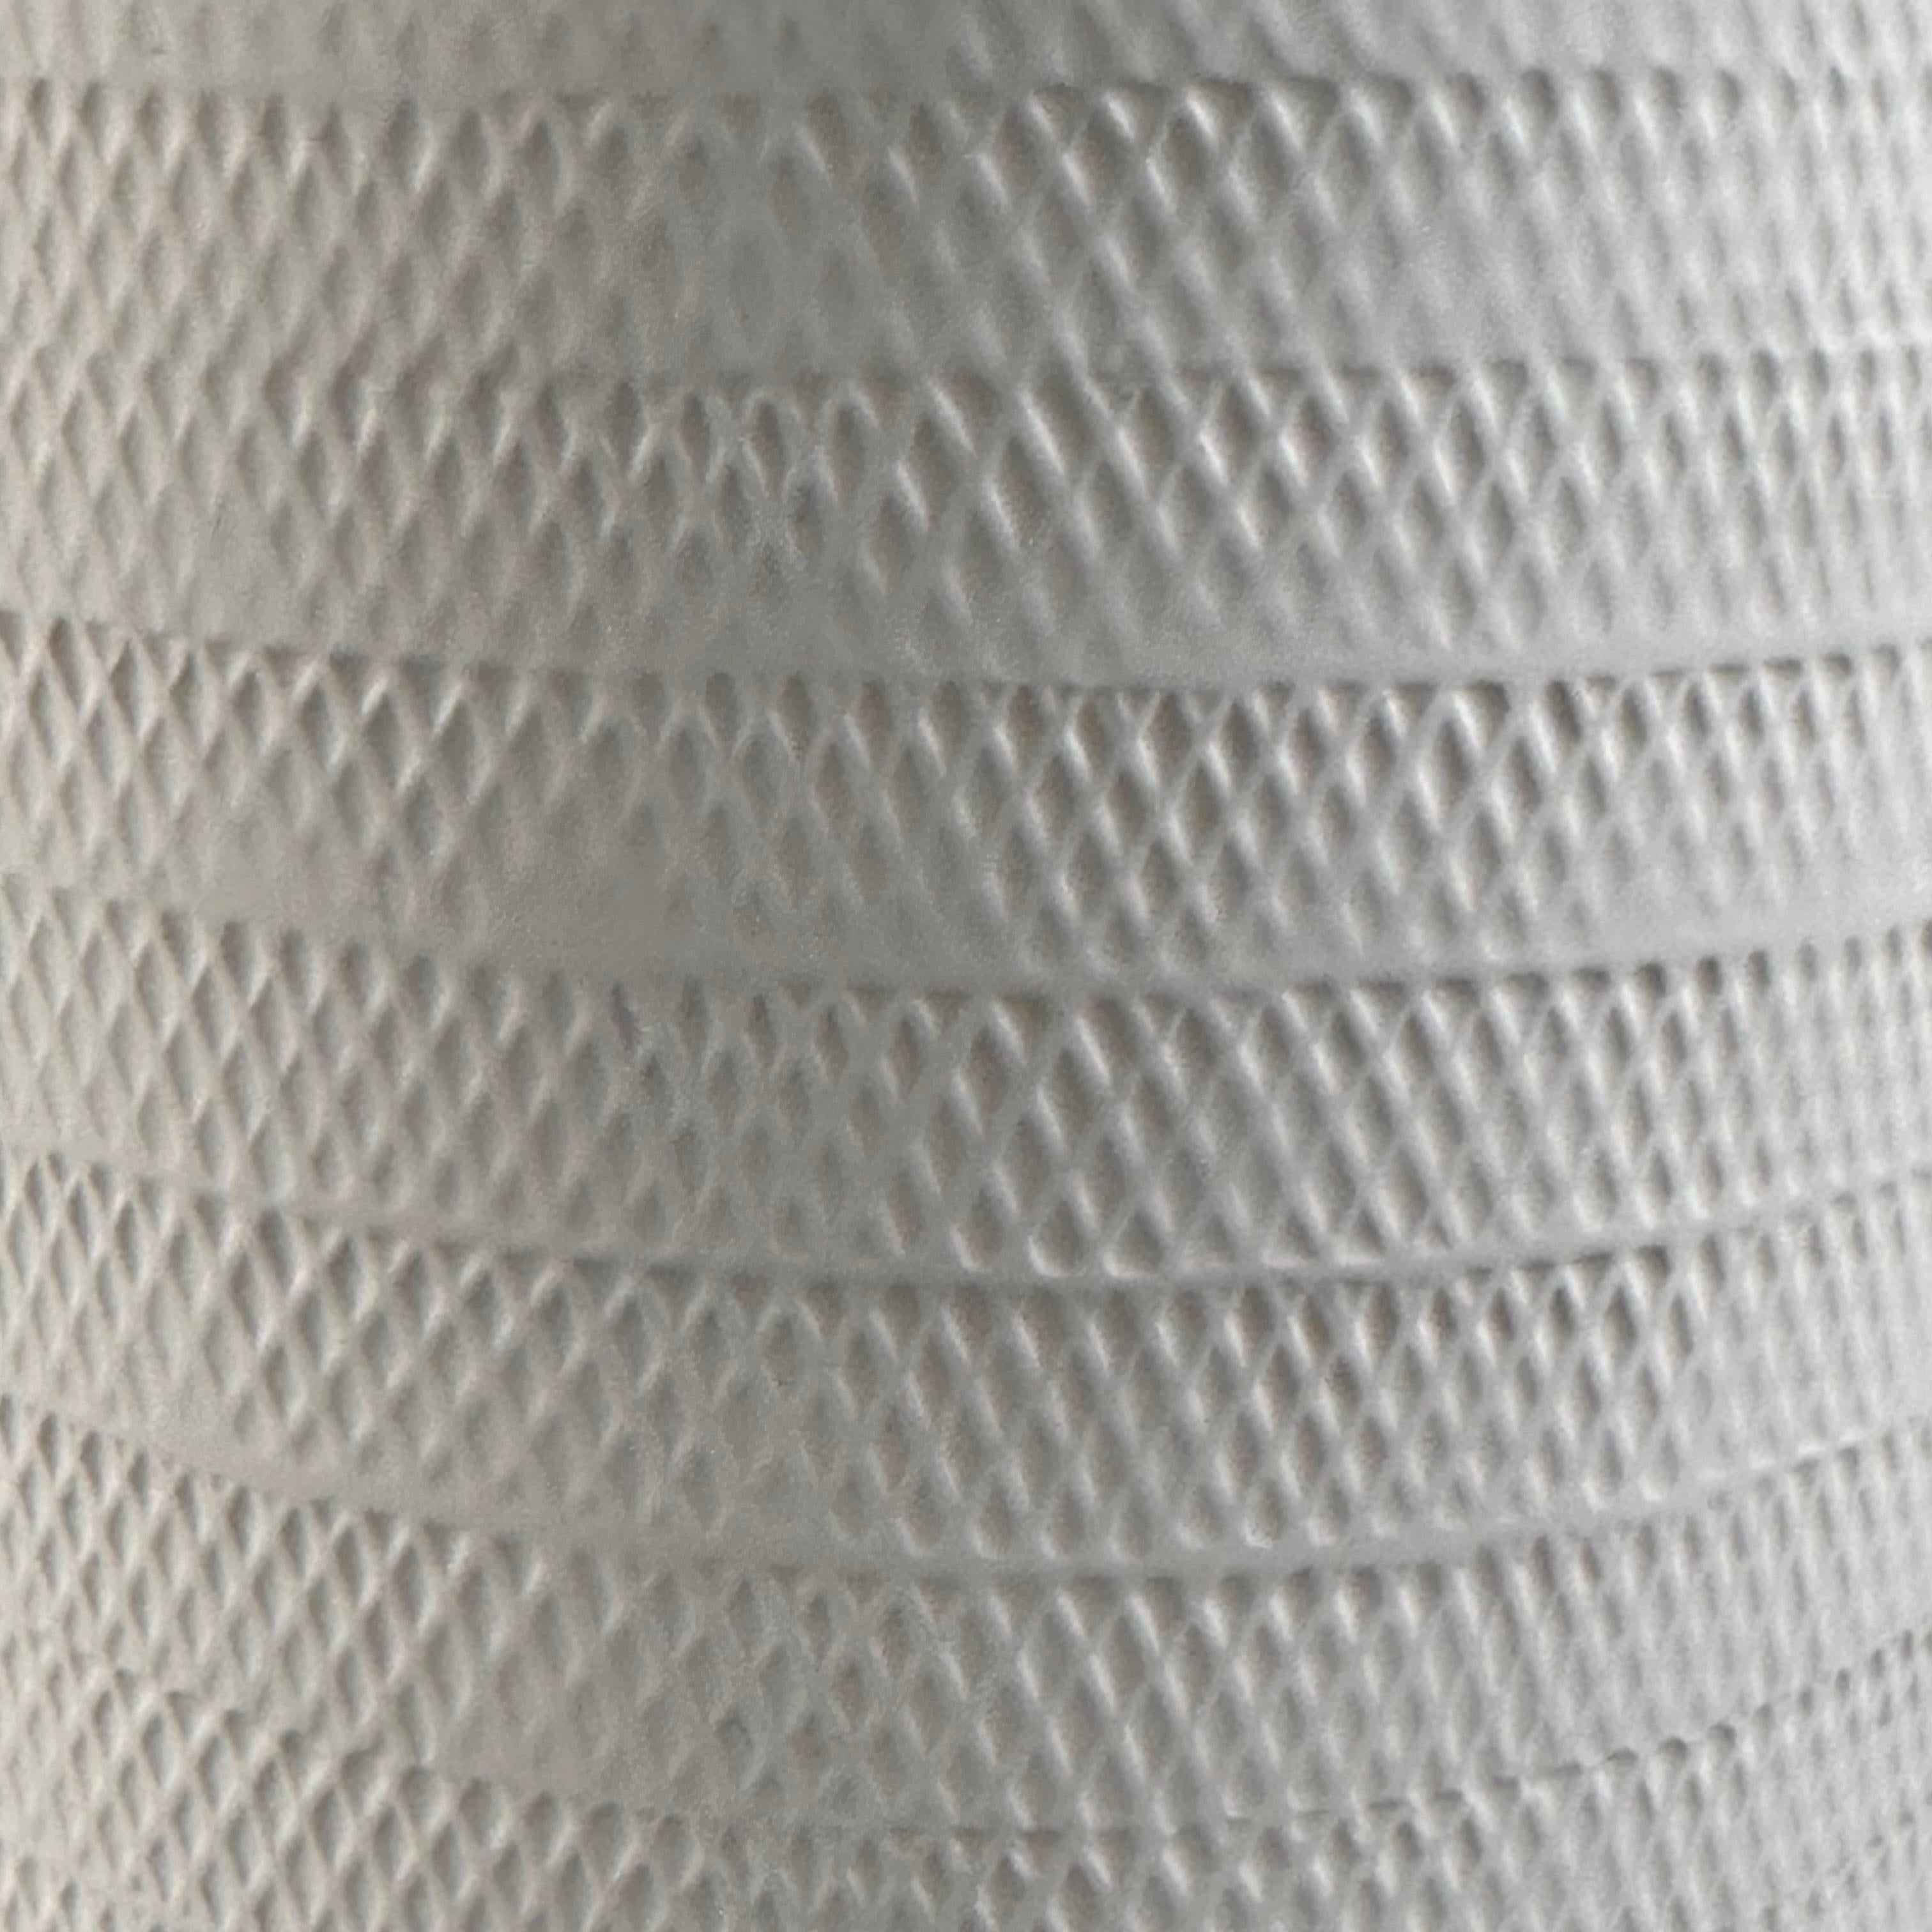 1980s Bitossi White Ceramic Set with Beautiful Texture, Pristine Condition For Sale 2